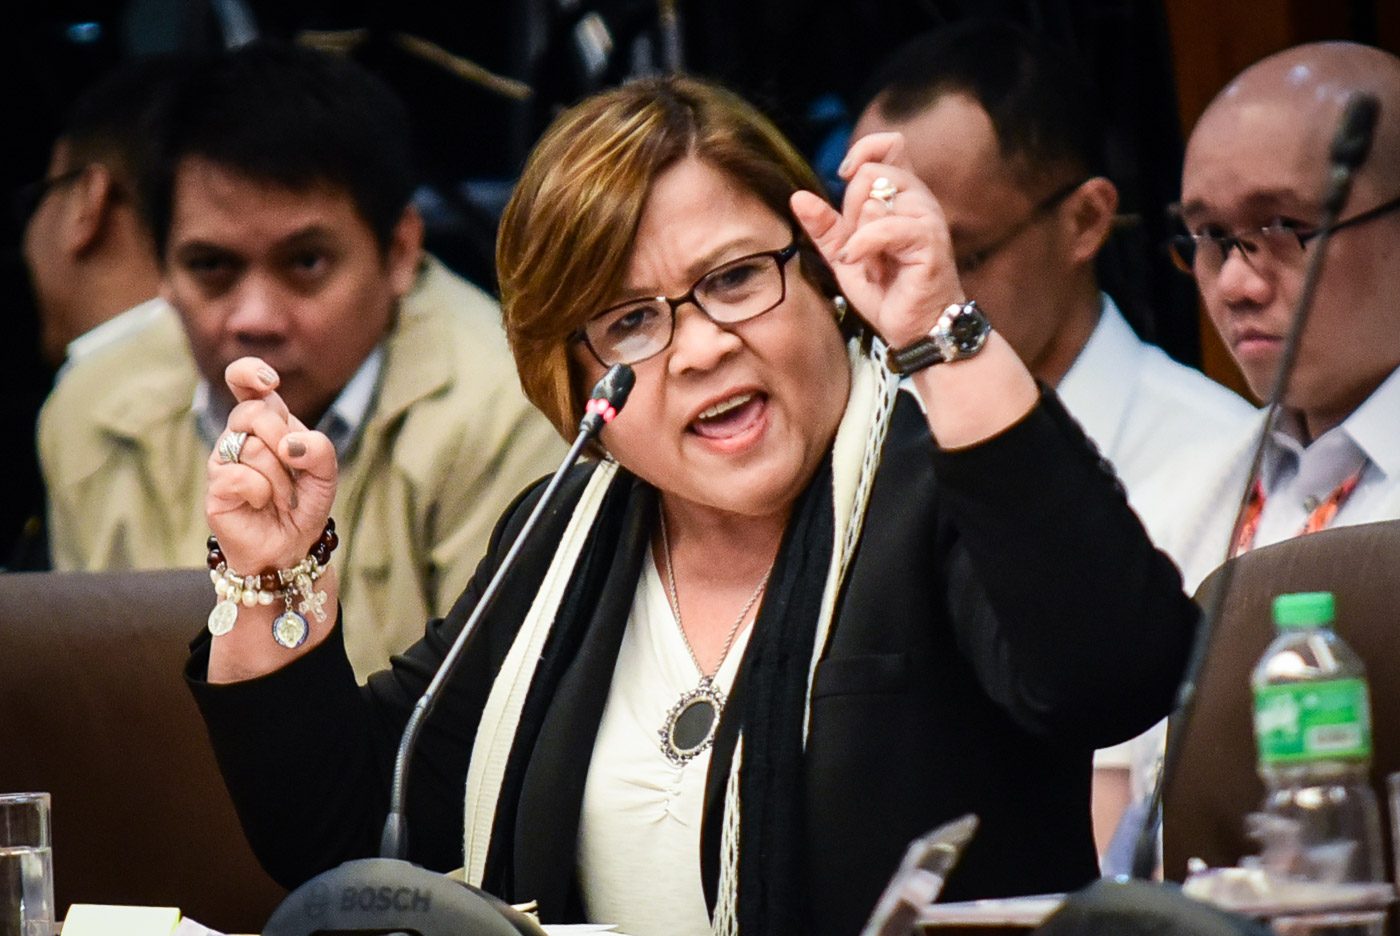 De Lima turns emotional, confronts accusers at Senate